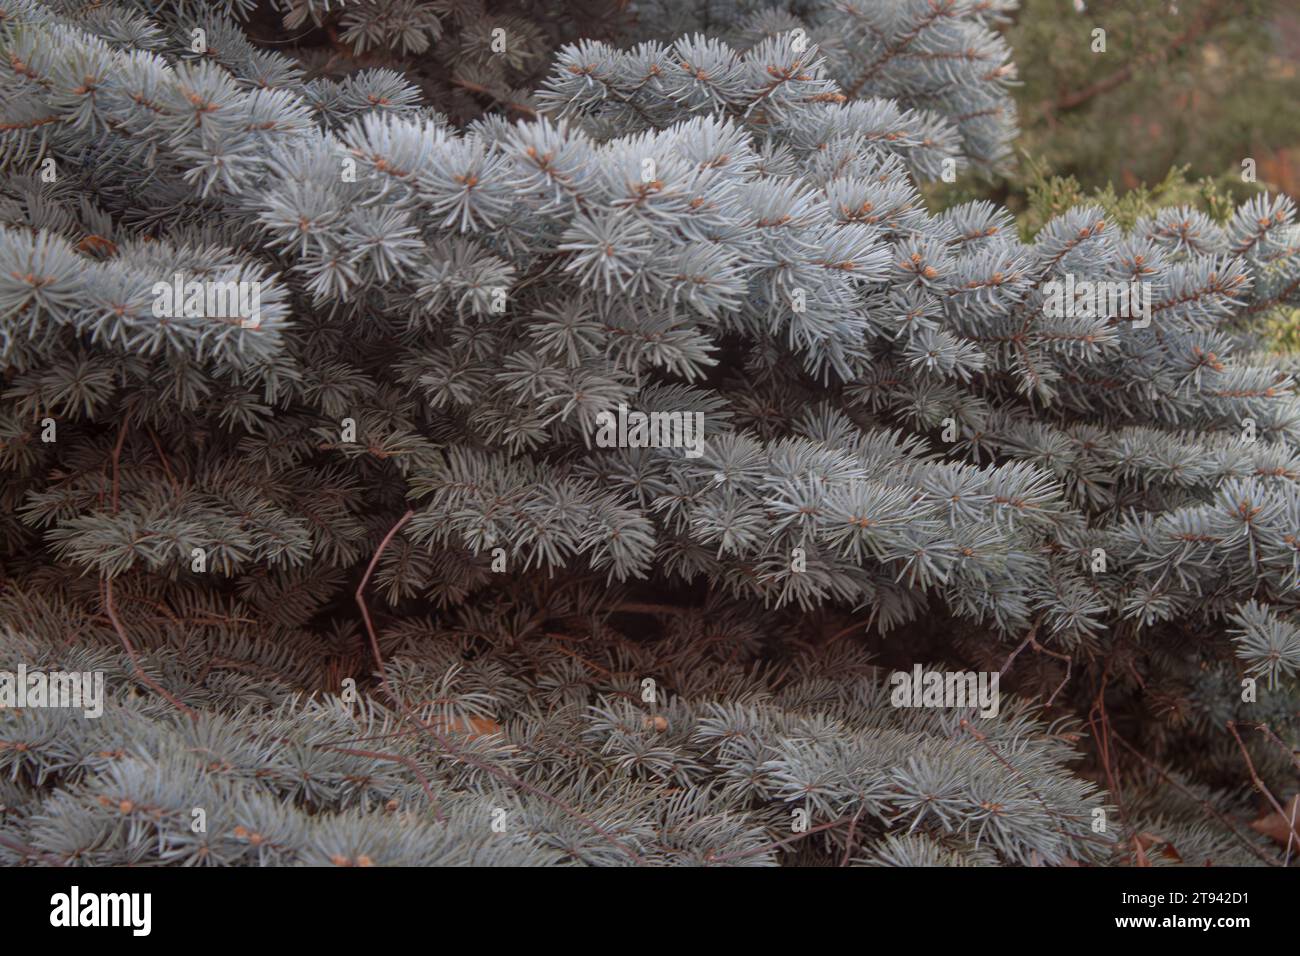 Pine tree Stock Photo